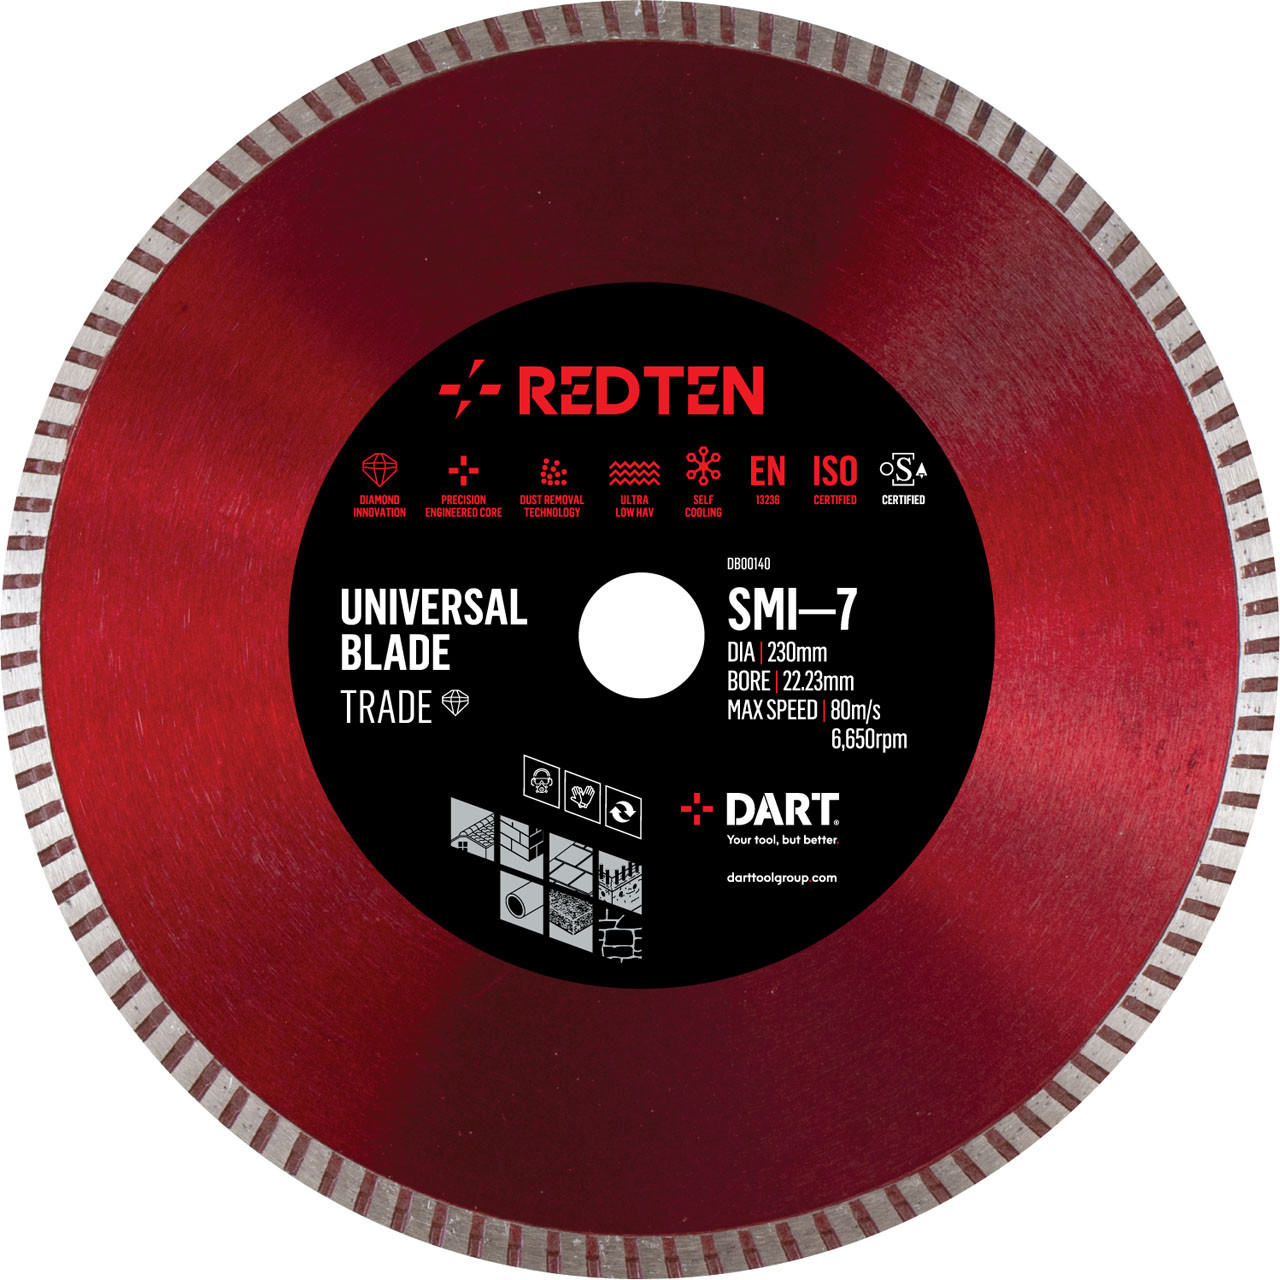 Photograph of Red Ten Smi-7 High Performance Diamond Blade 300mm X 20mm